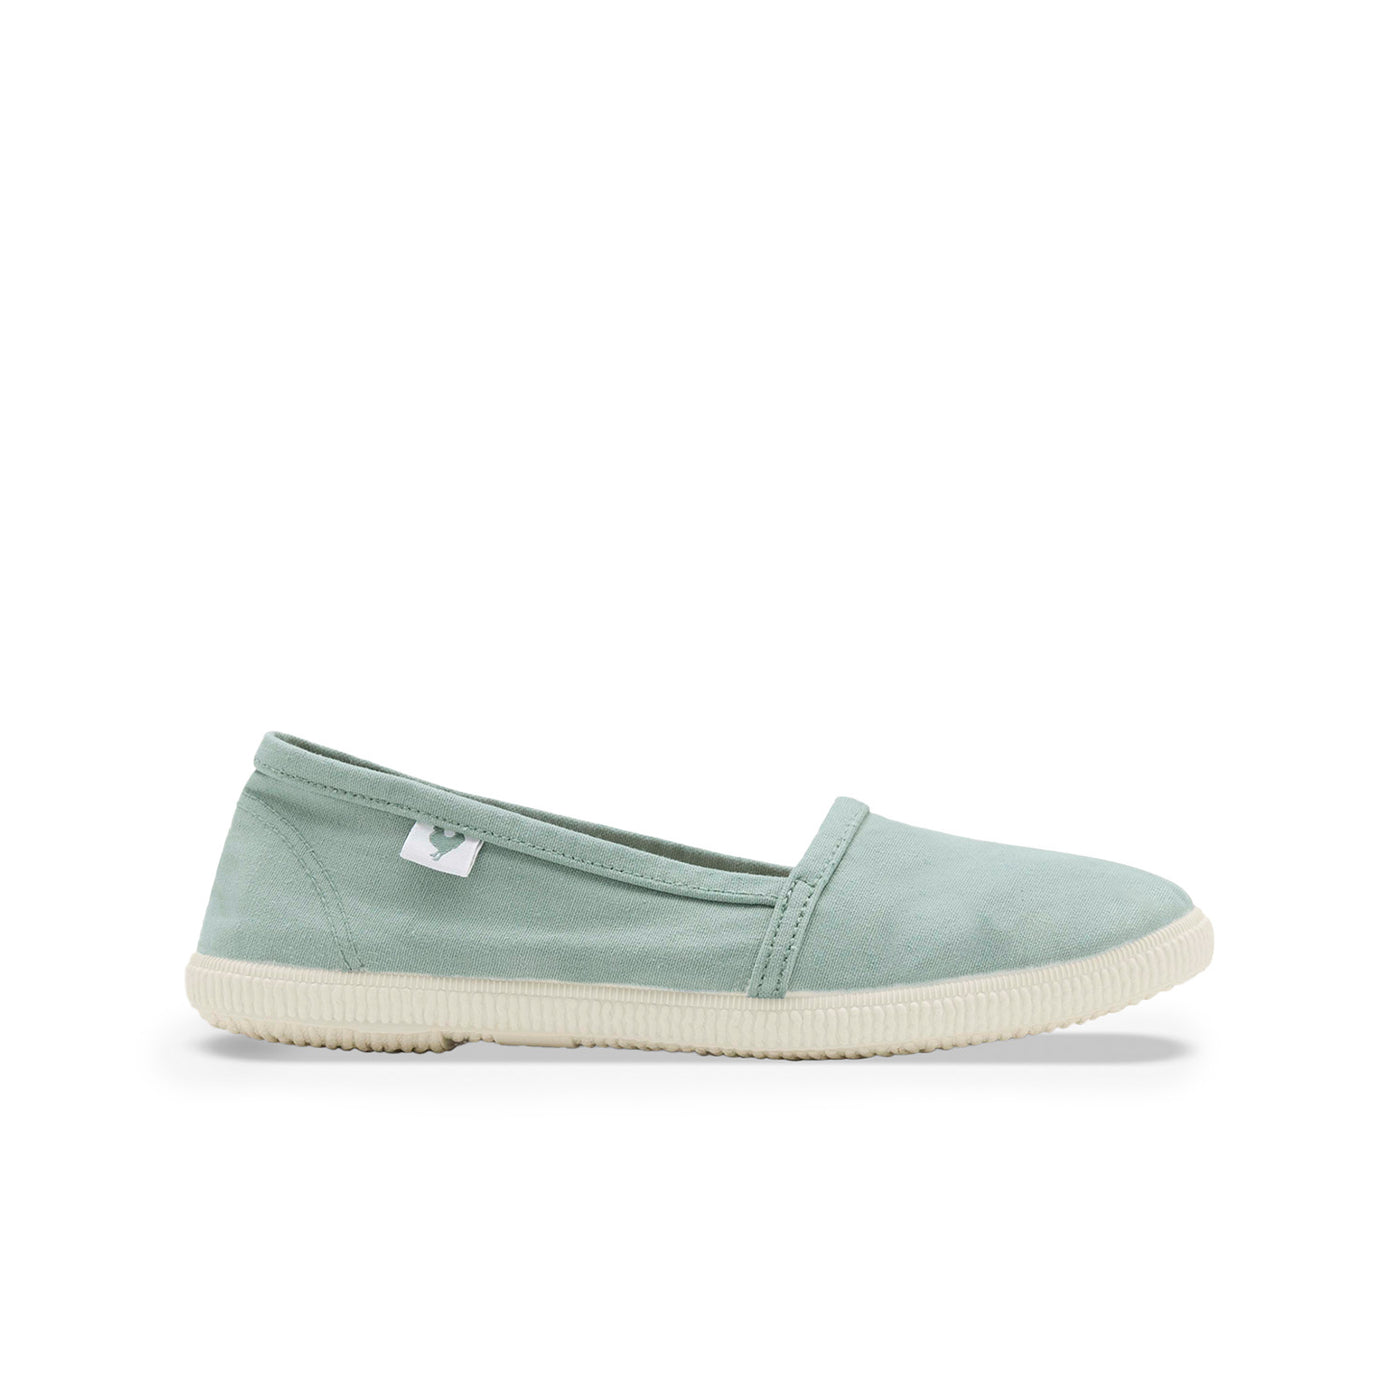 Original Pitas Beach Shoes in Med Green